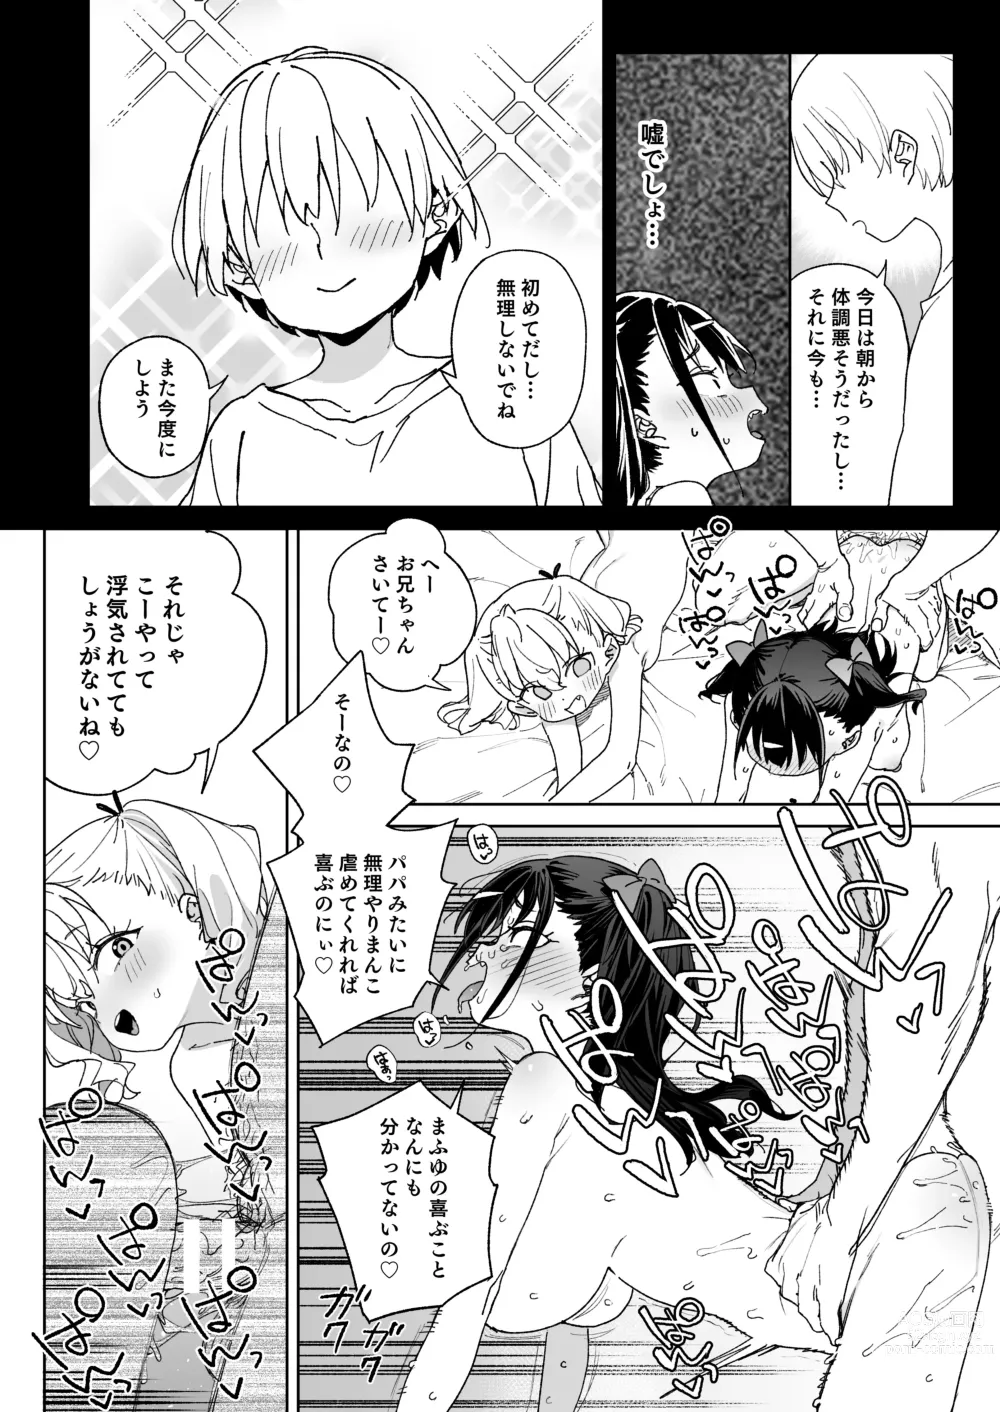 Page 17 of doujinshi Yamenakute wa Ikenai.